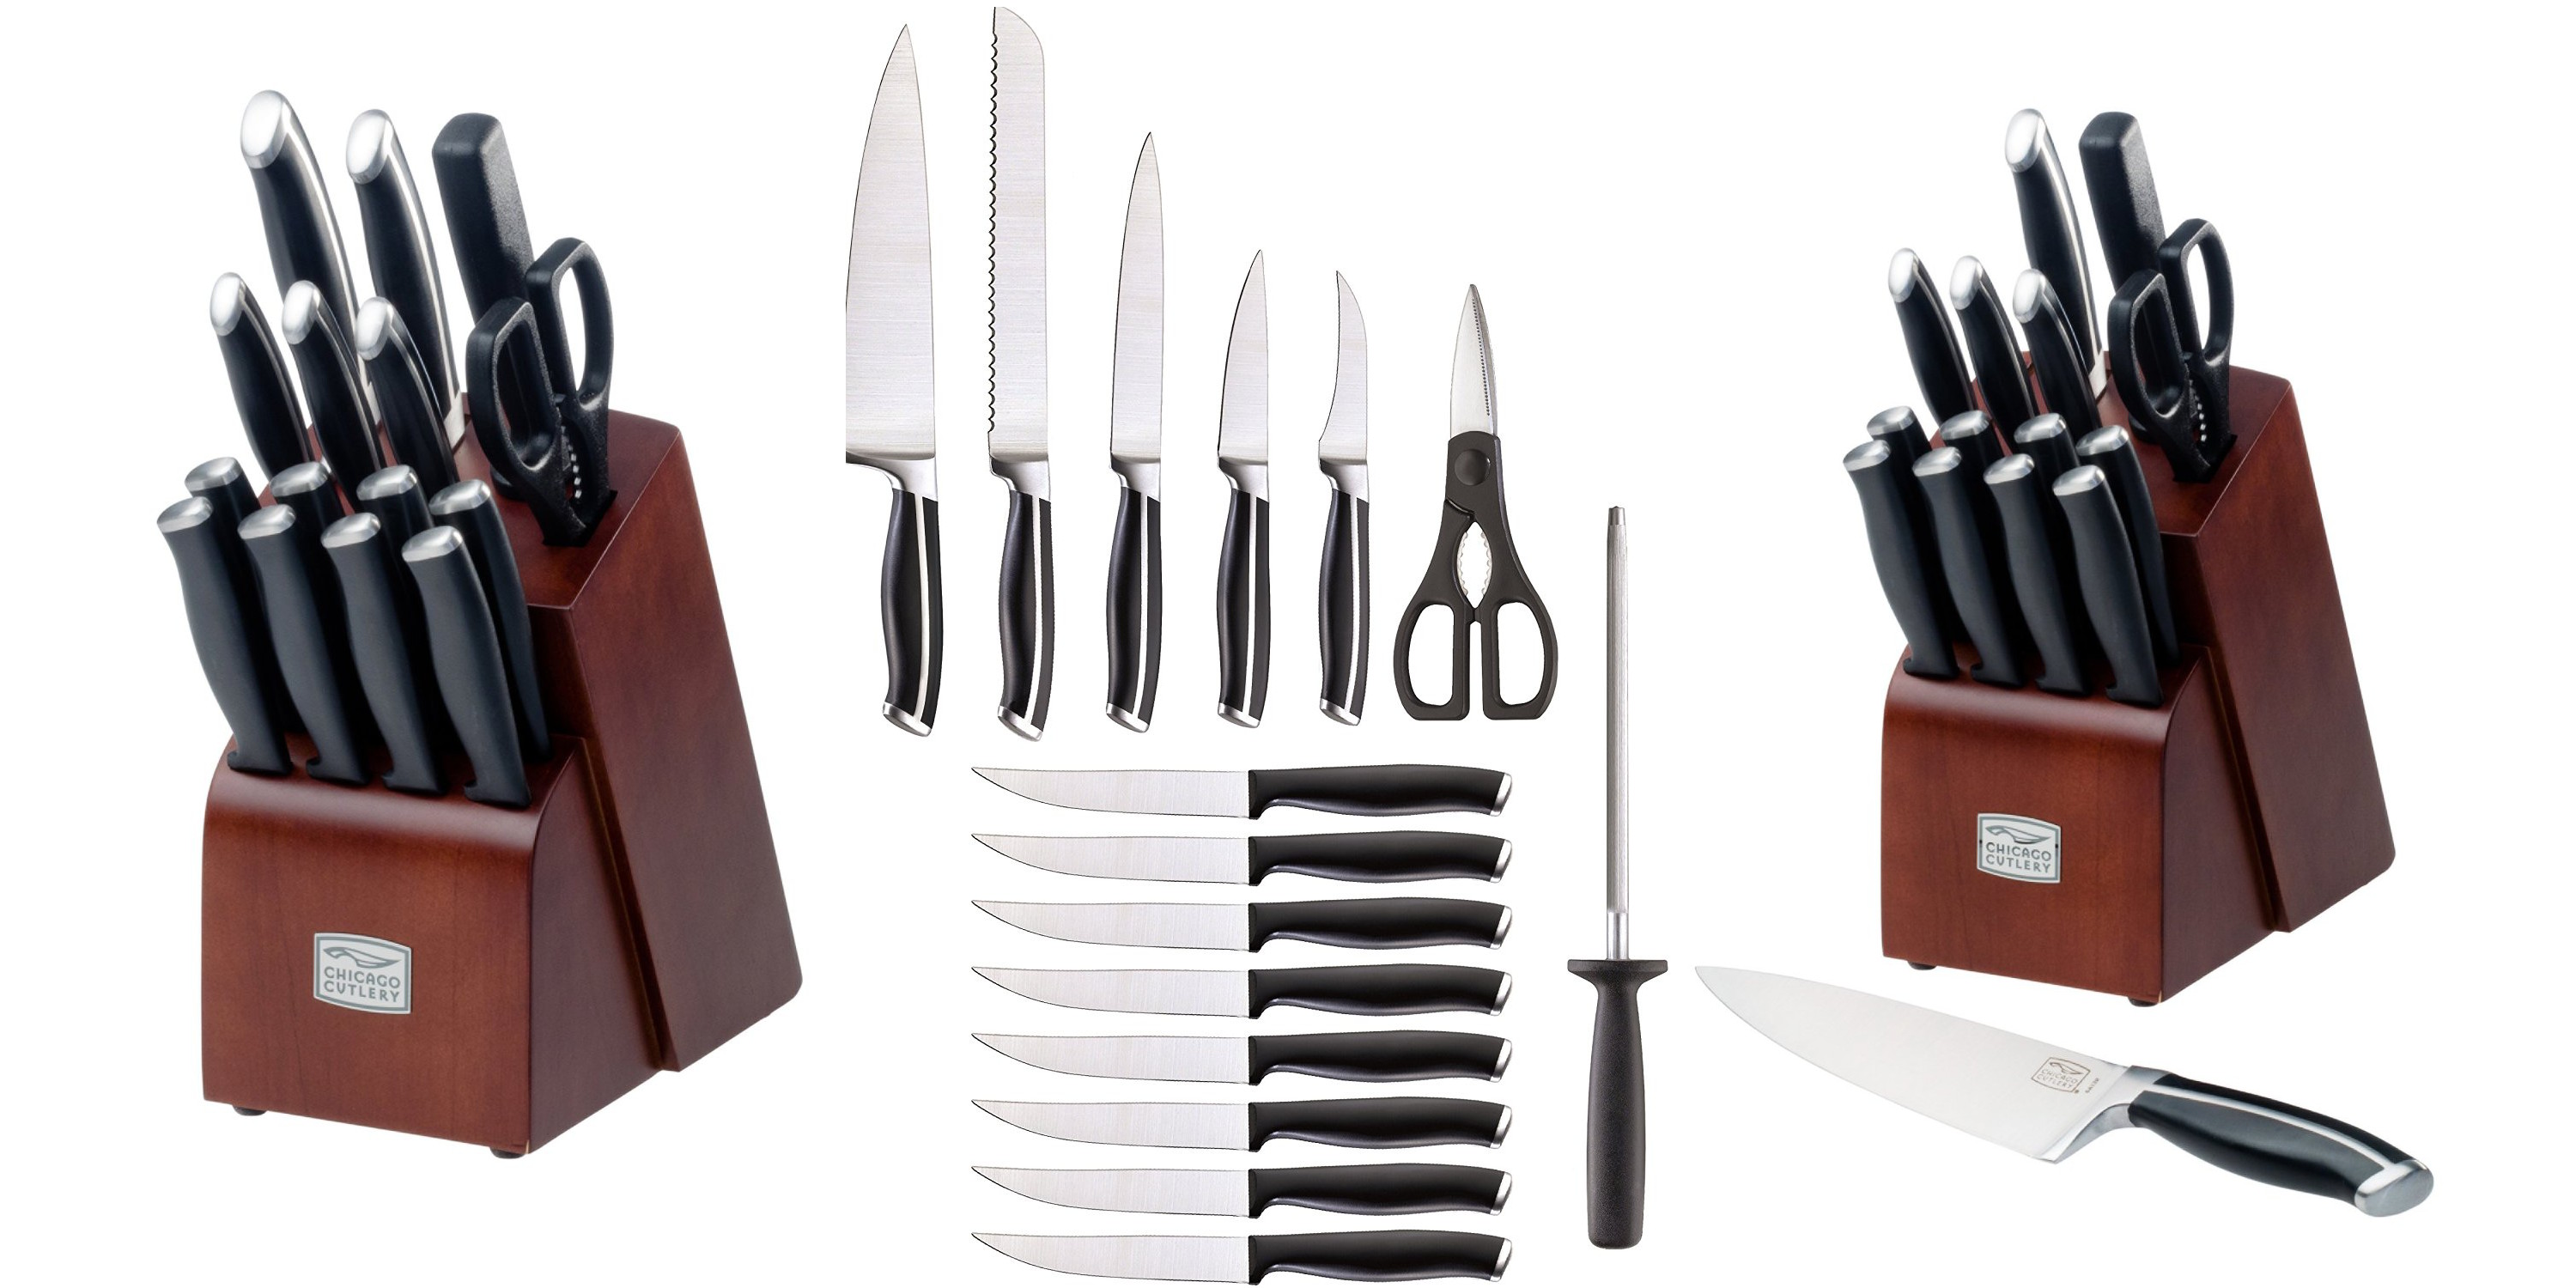 chicago-cutlery-belmont-16-piece-block-knife-set-4